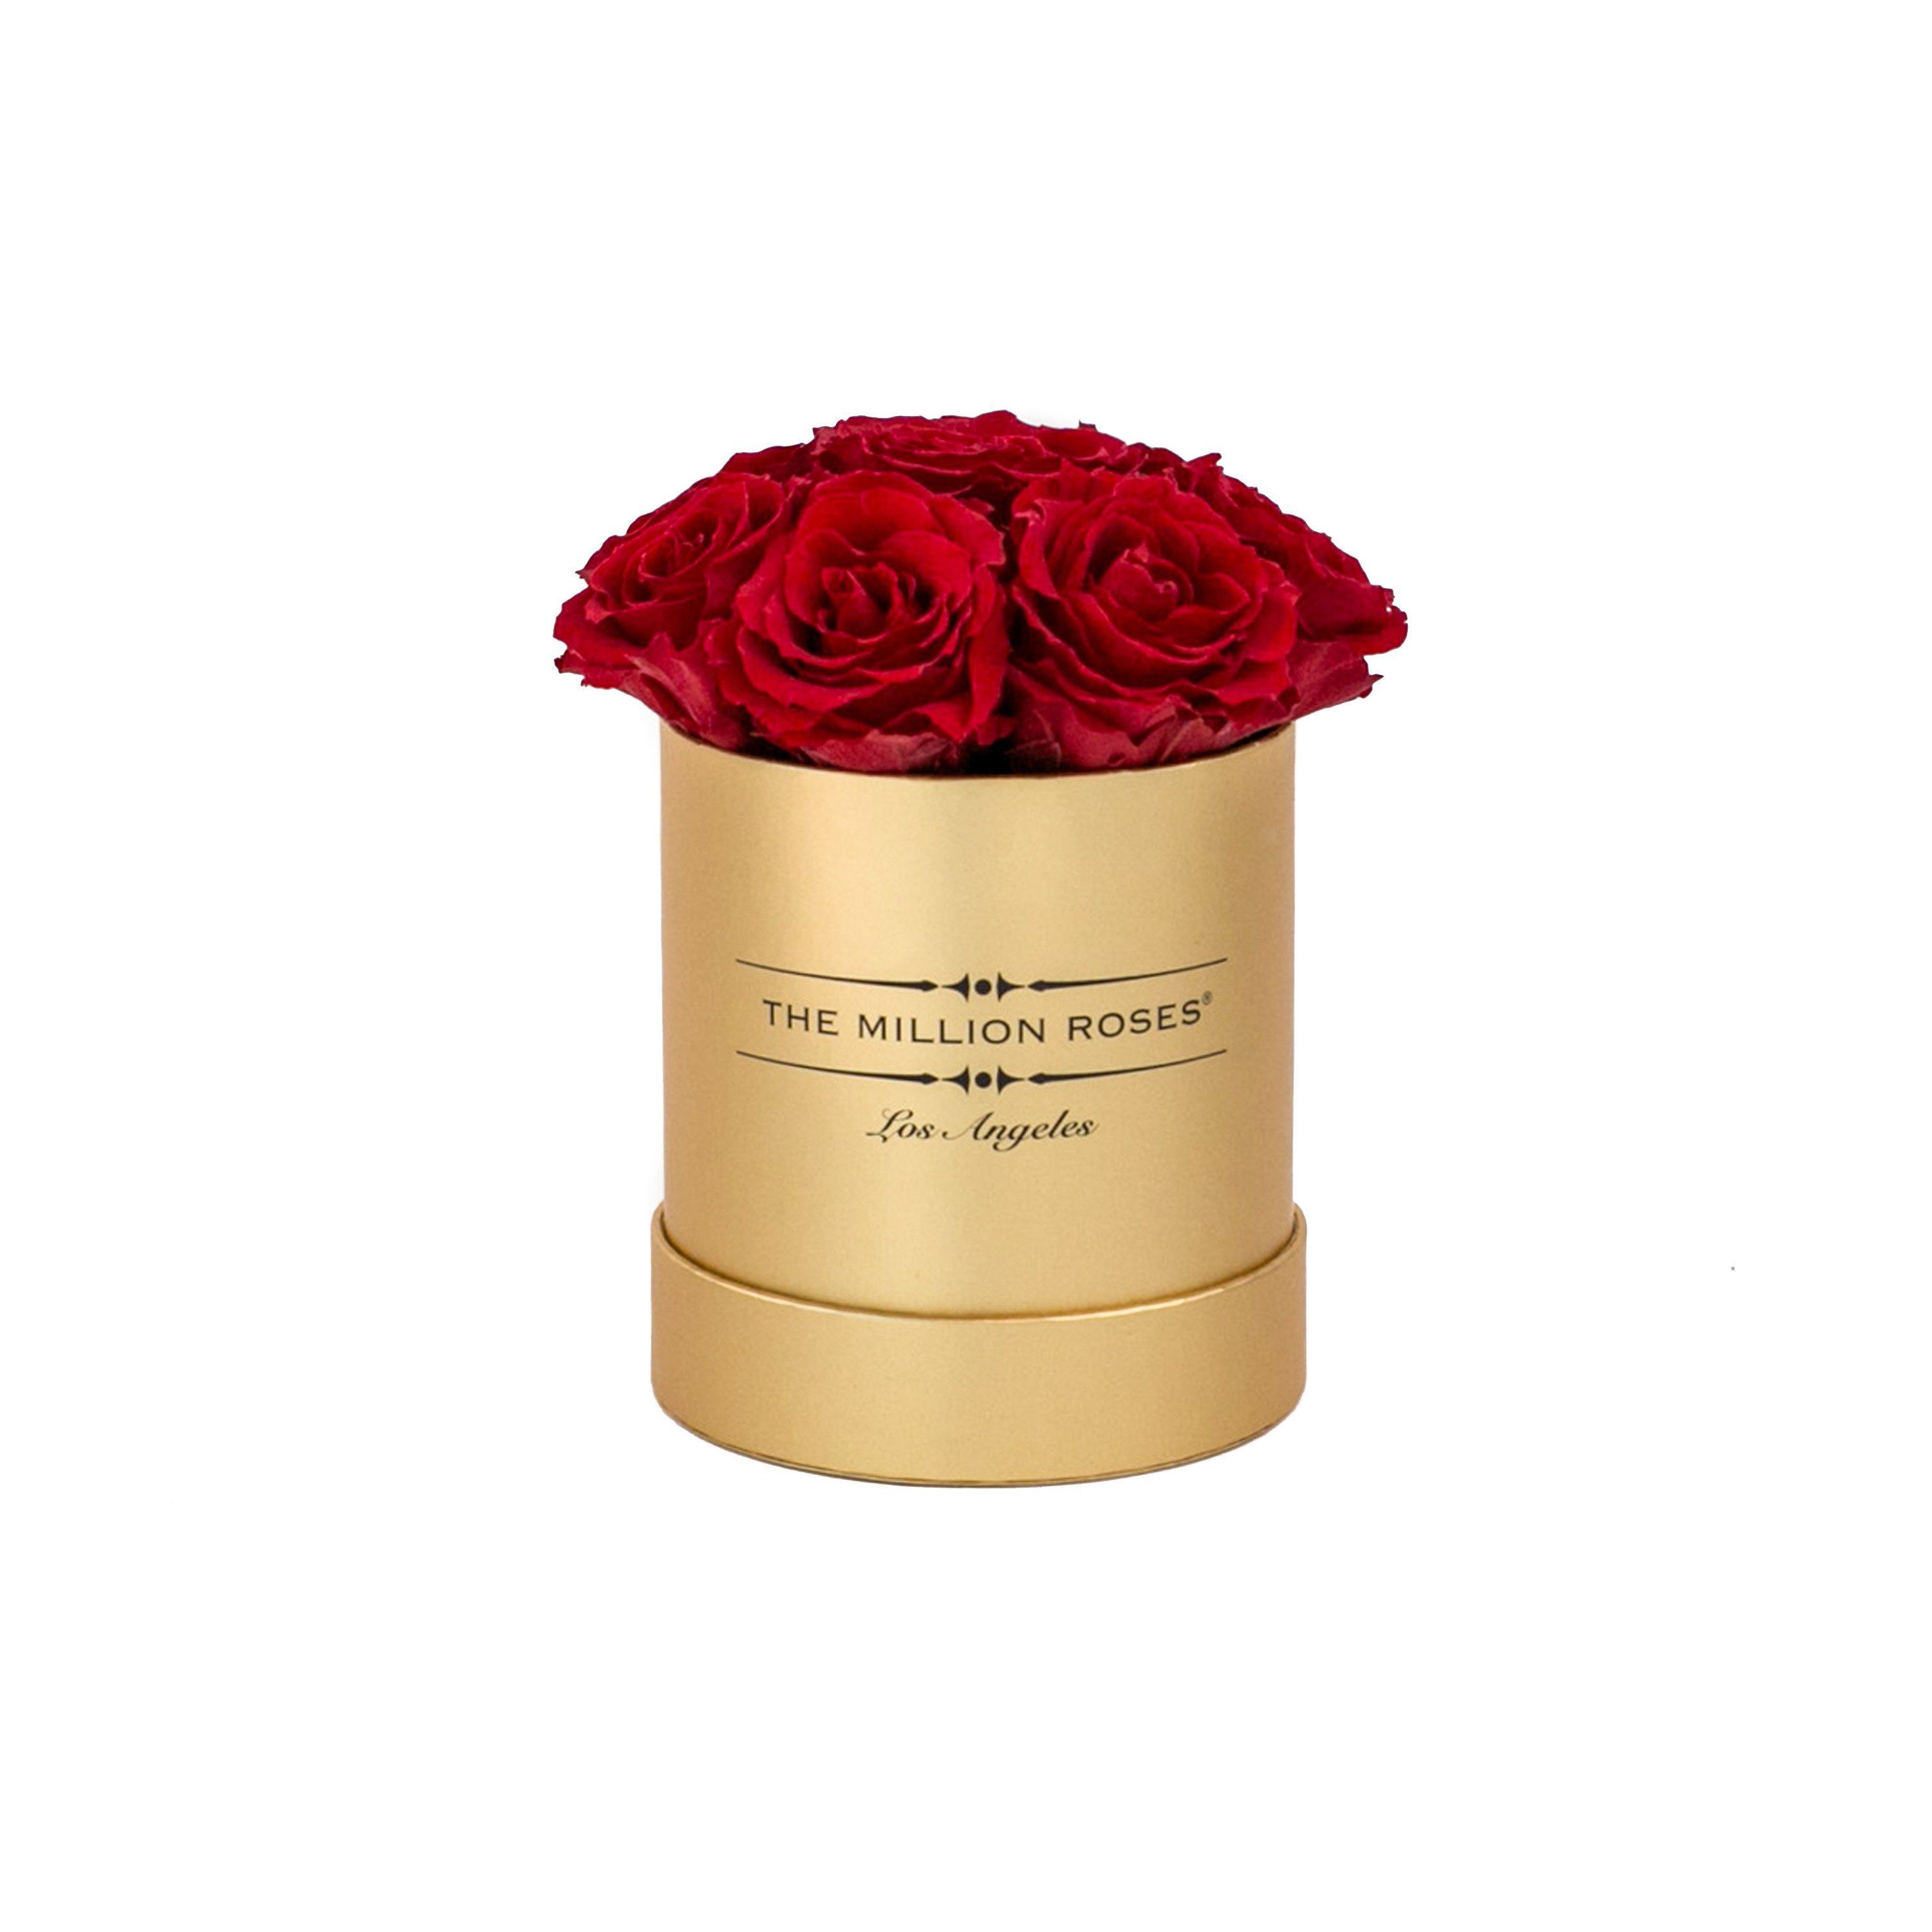 the million Basic+ box - gold - red ETERNITY+ roses red eternity roses - the million roses